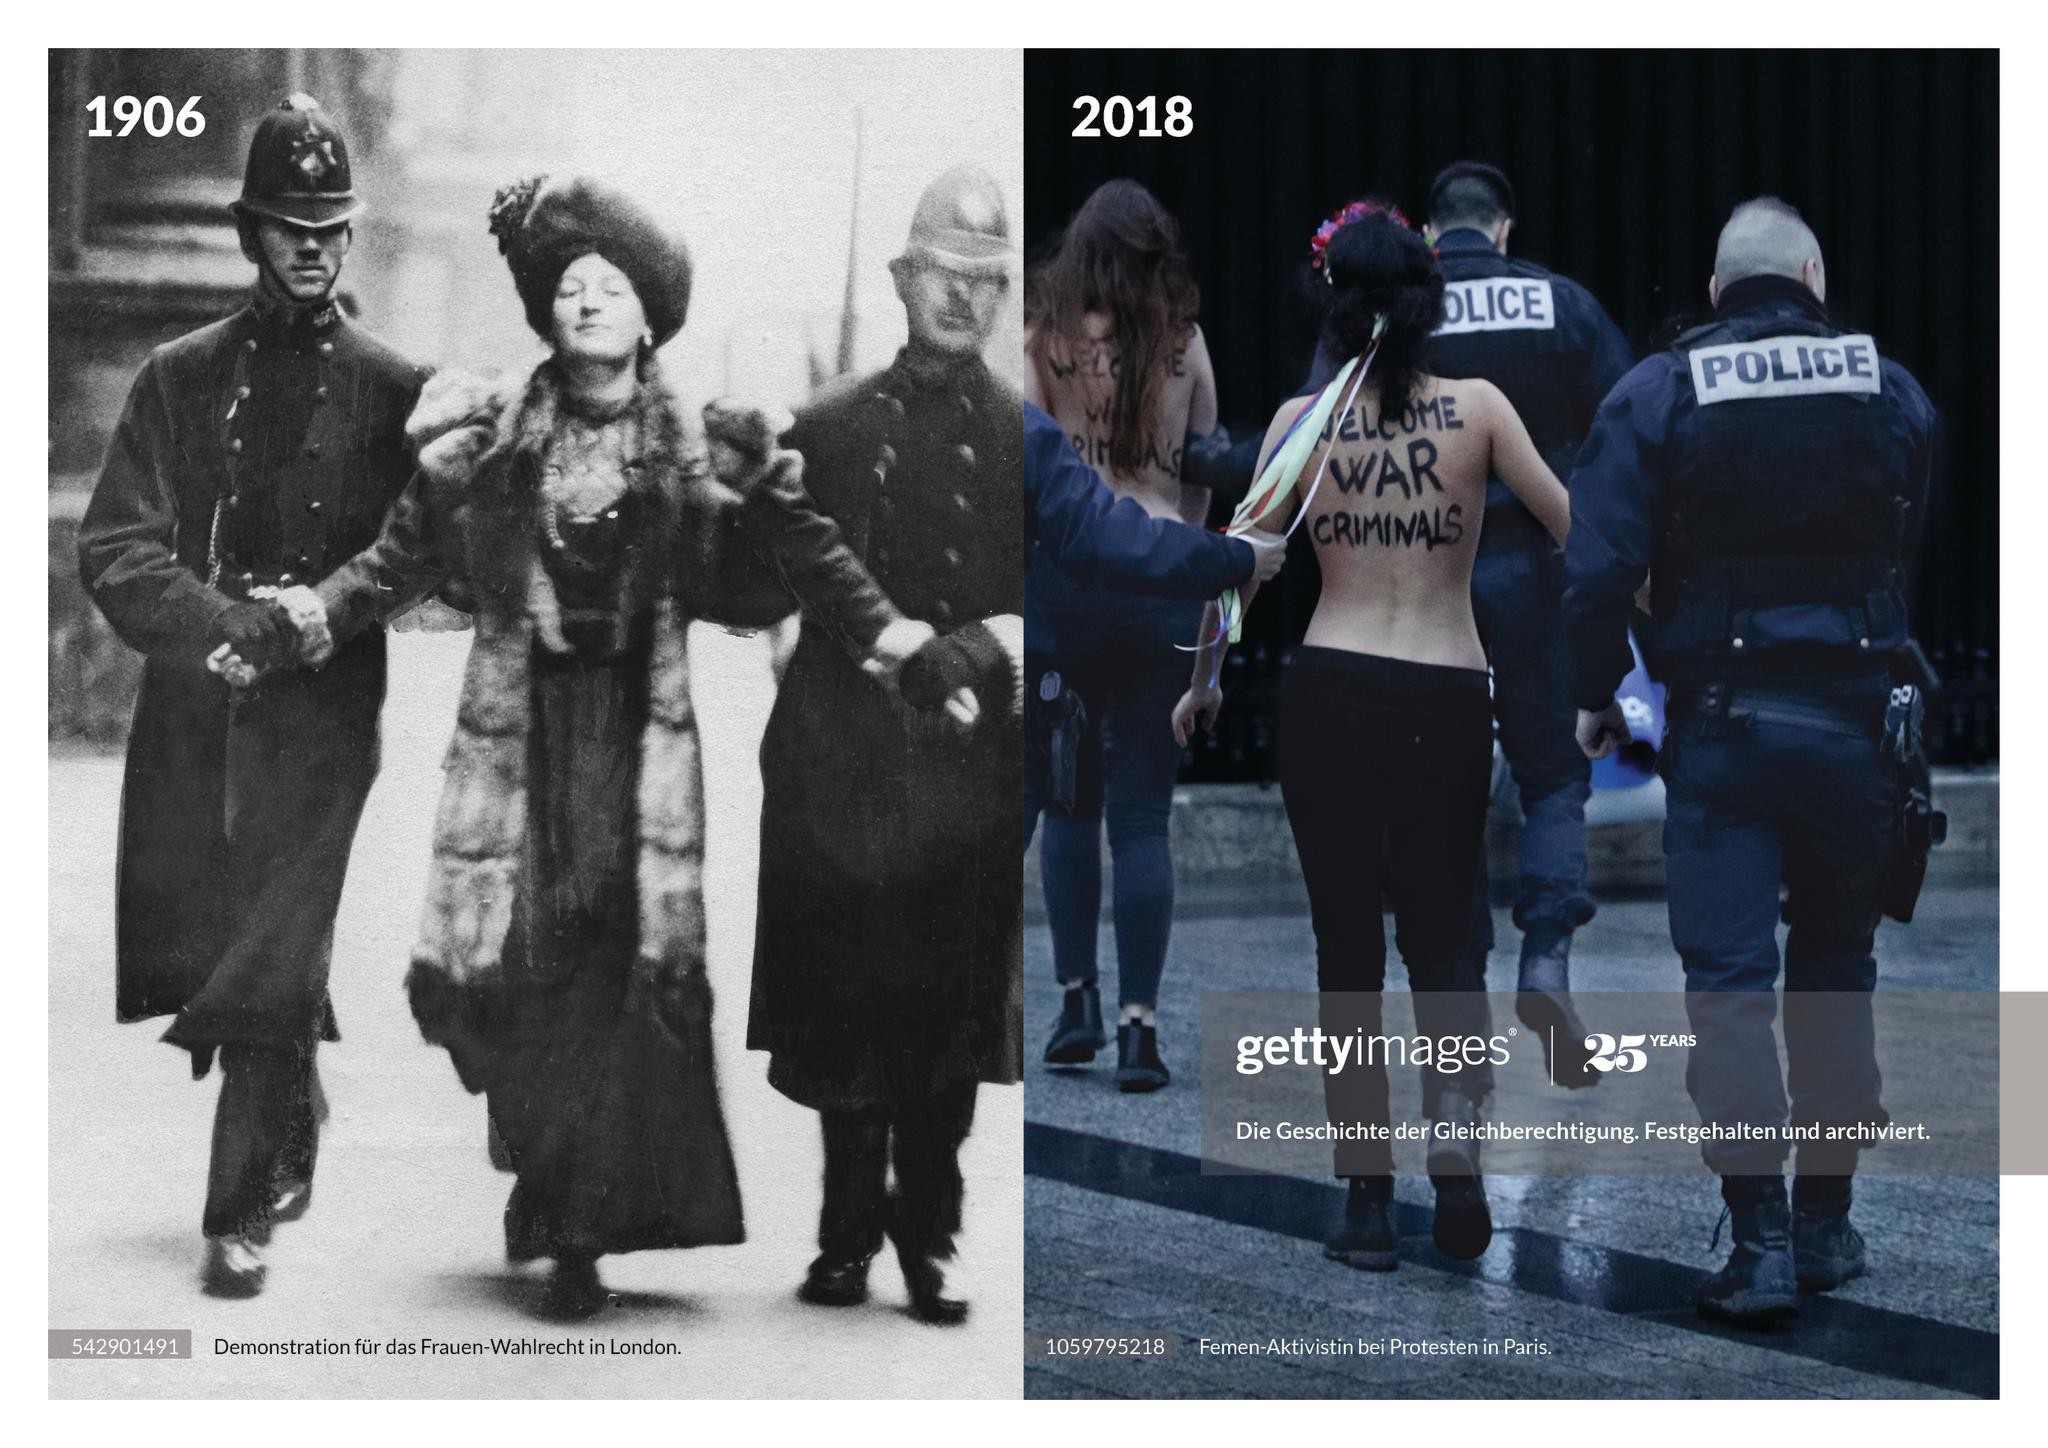 History repeats - Equality